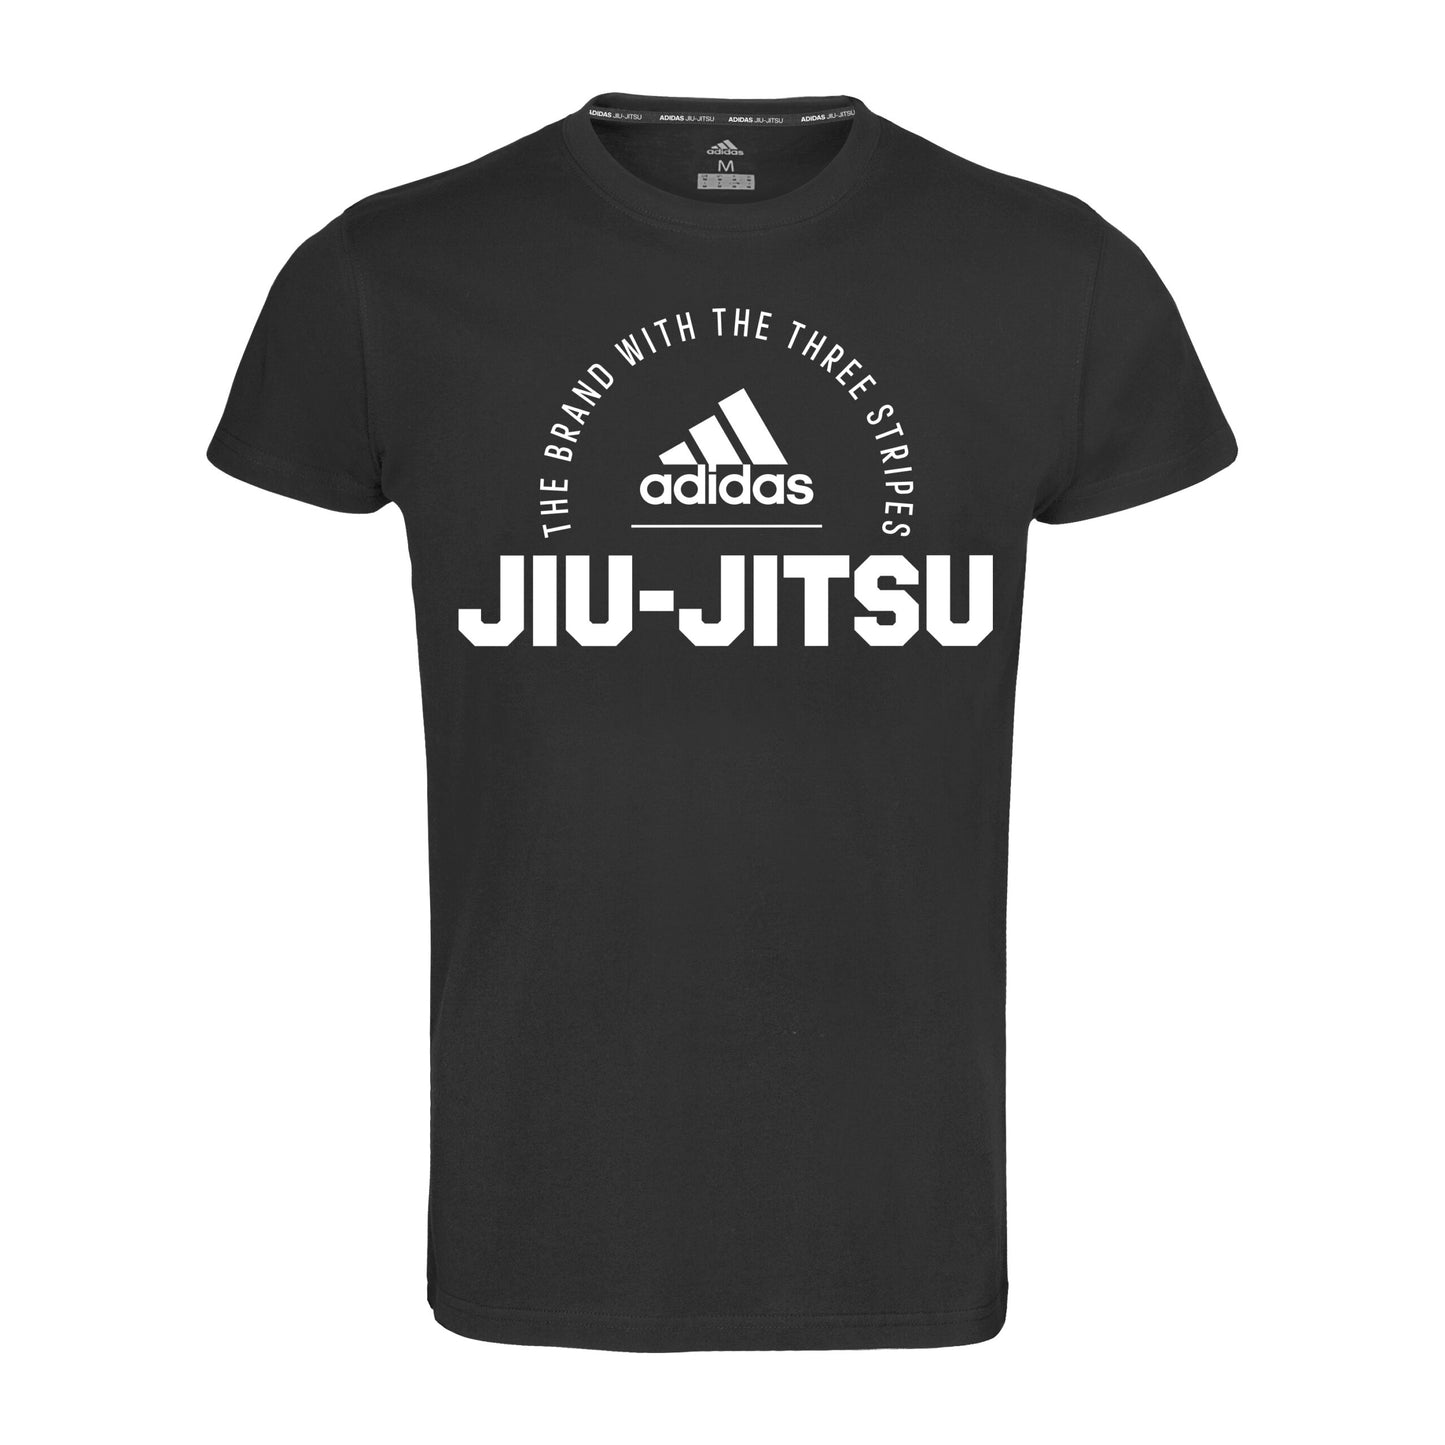 Clts21 Bjj Adidas Jiu Jitsu T Shirt Black 01